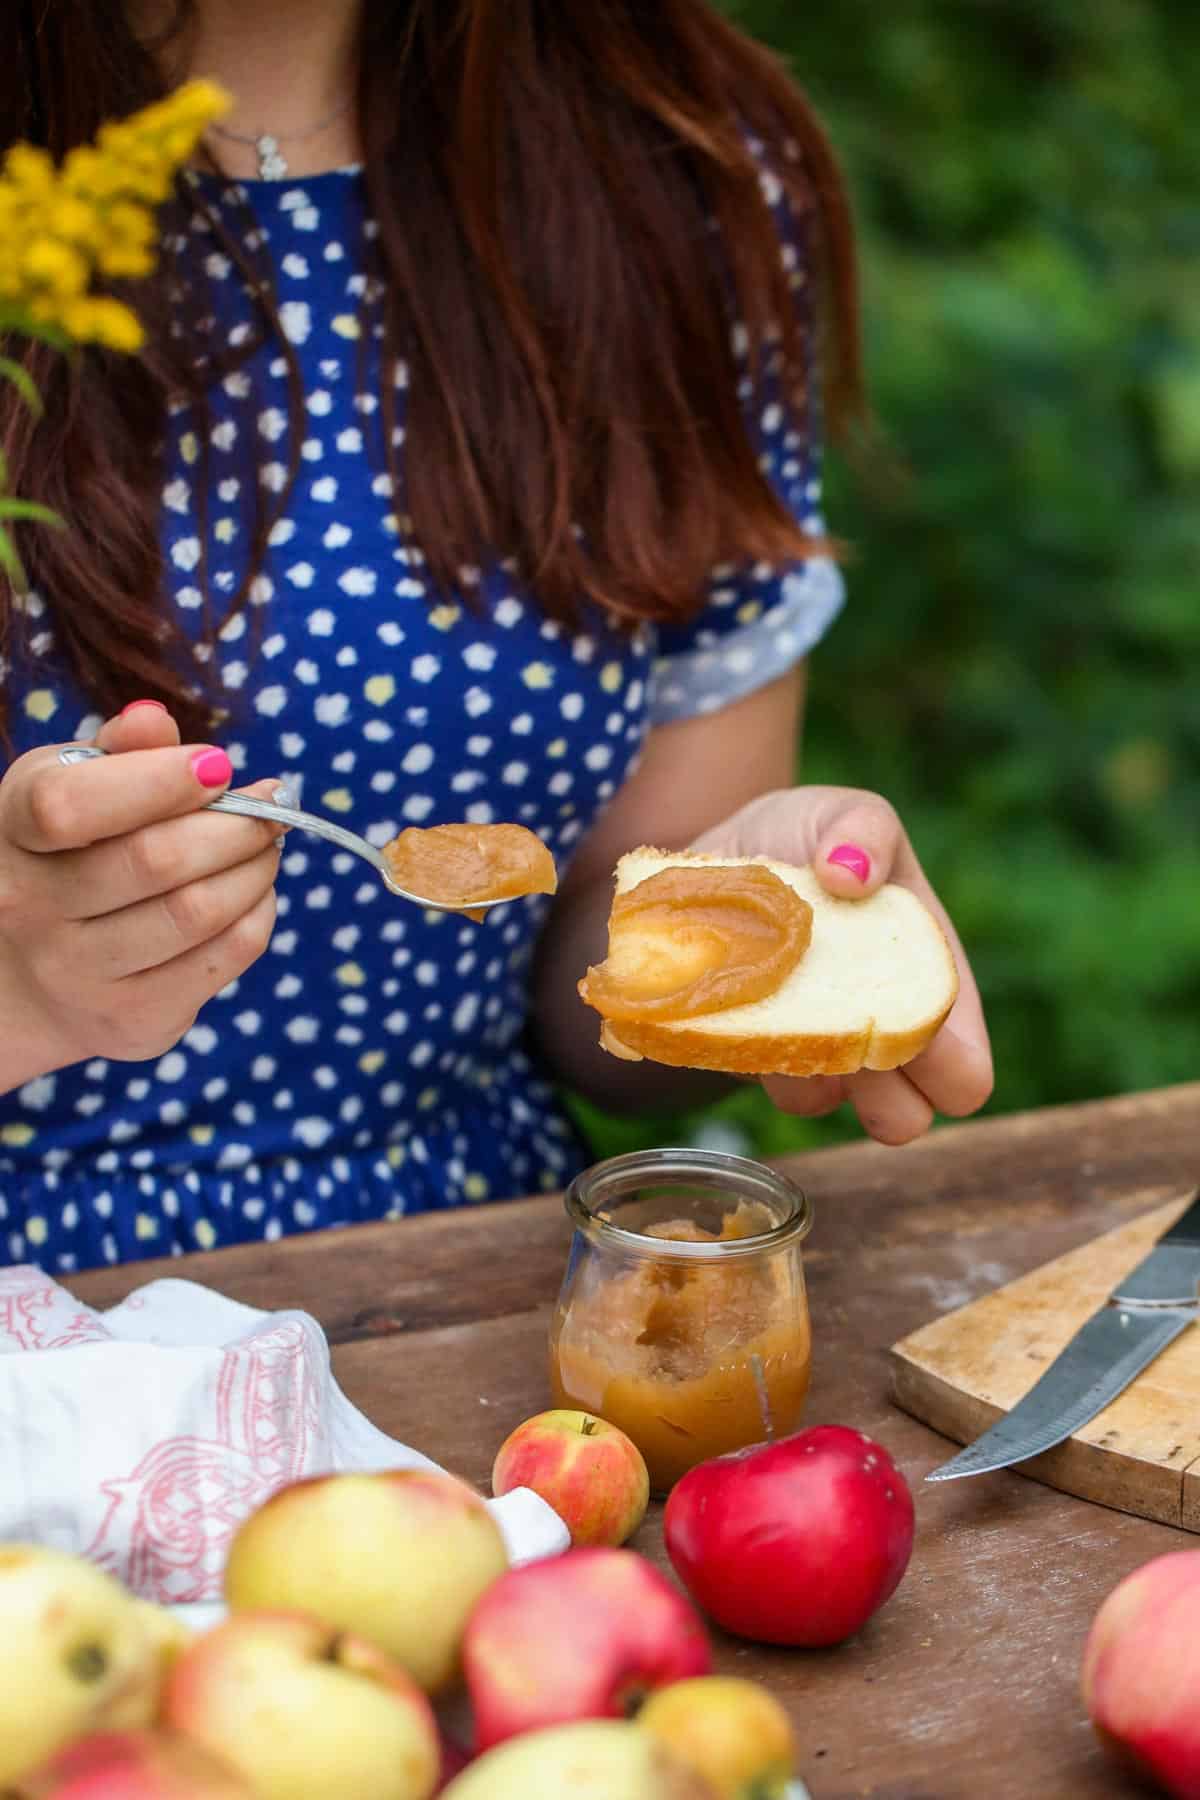 Girl spreading apple butter on toast, wearing a navy polka dot dress